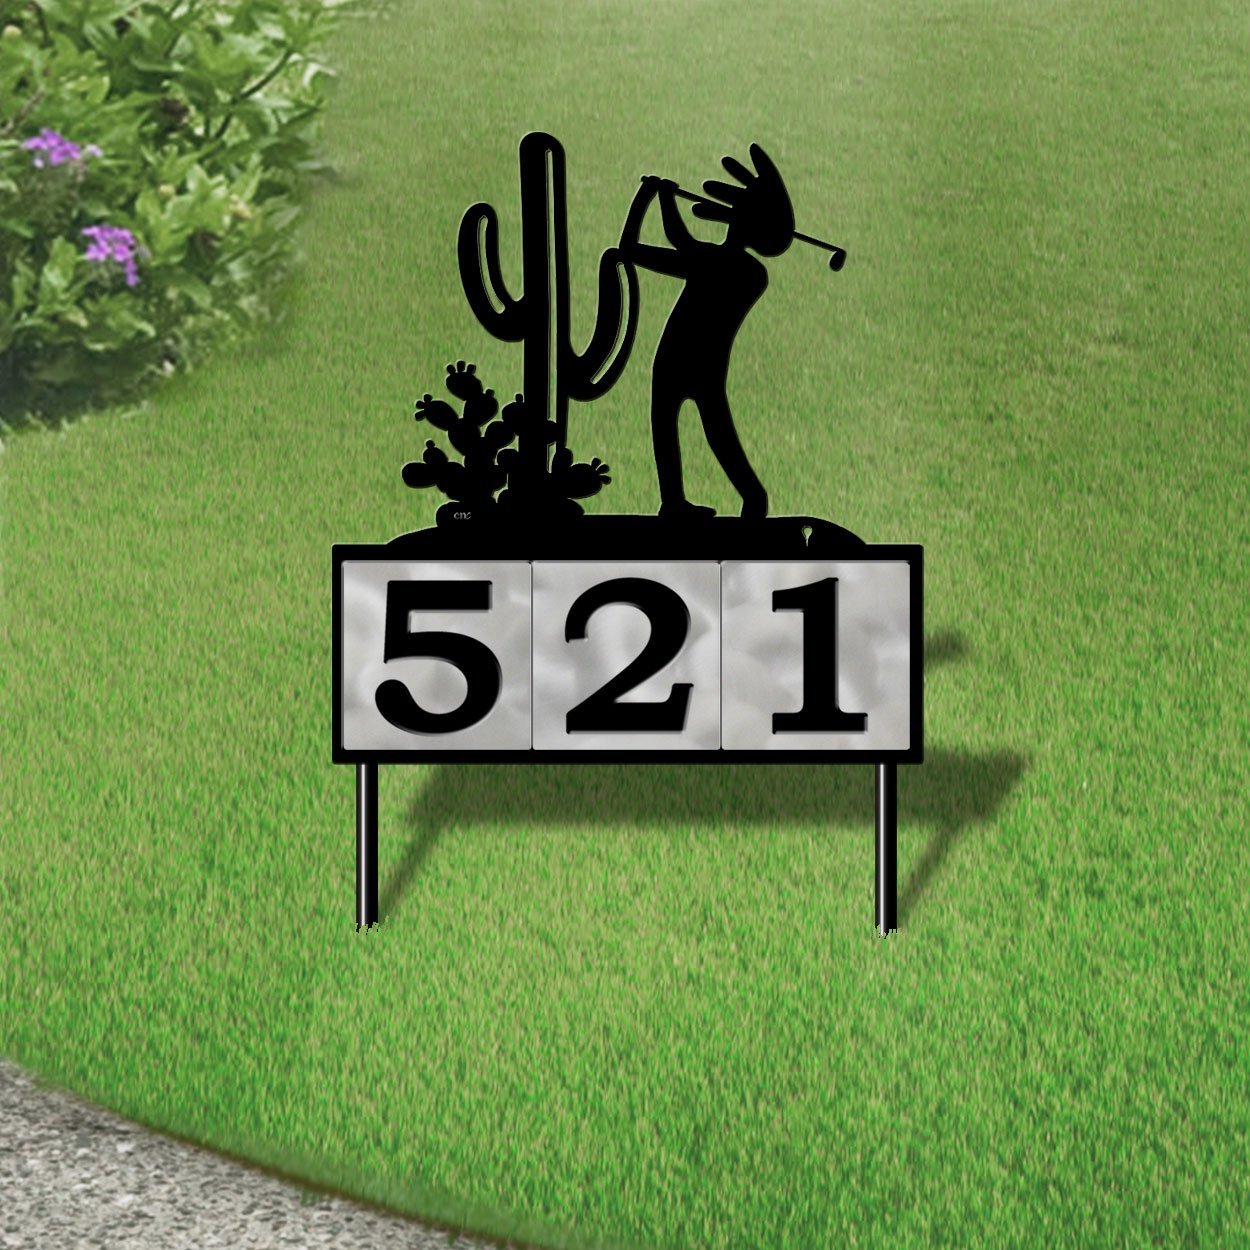 610133 - Kokopelli Desert Golfer Design 3-Digit Horizontal 6-inch Tile Outdoor House Numbers Yard Sign